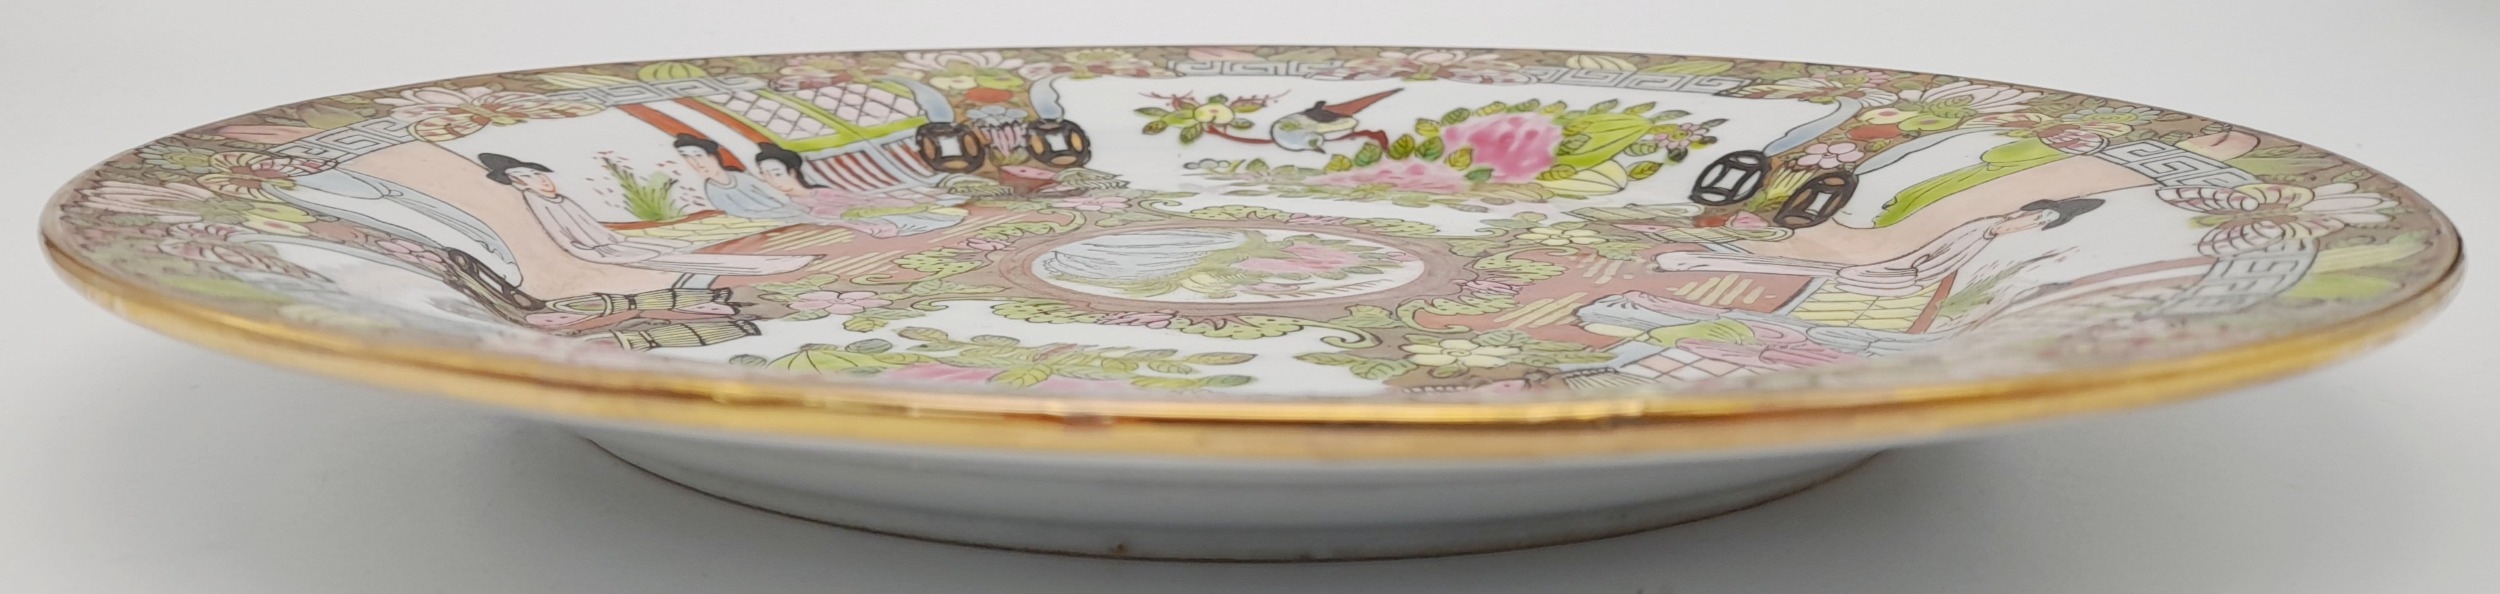 A Decorative Chinese Famille Rose Ceramic Plate. Court scene decoration. 26cm diameter. - Image 6 of 6